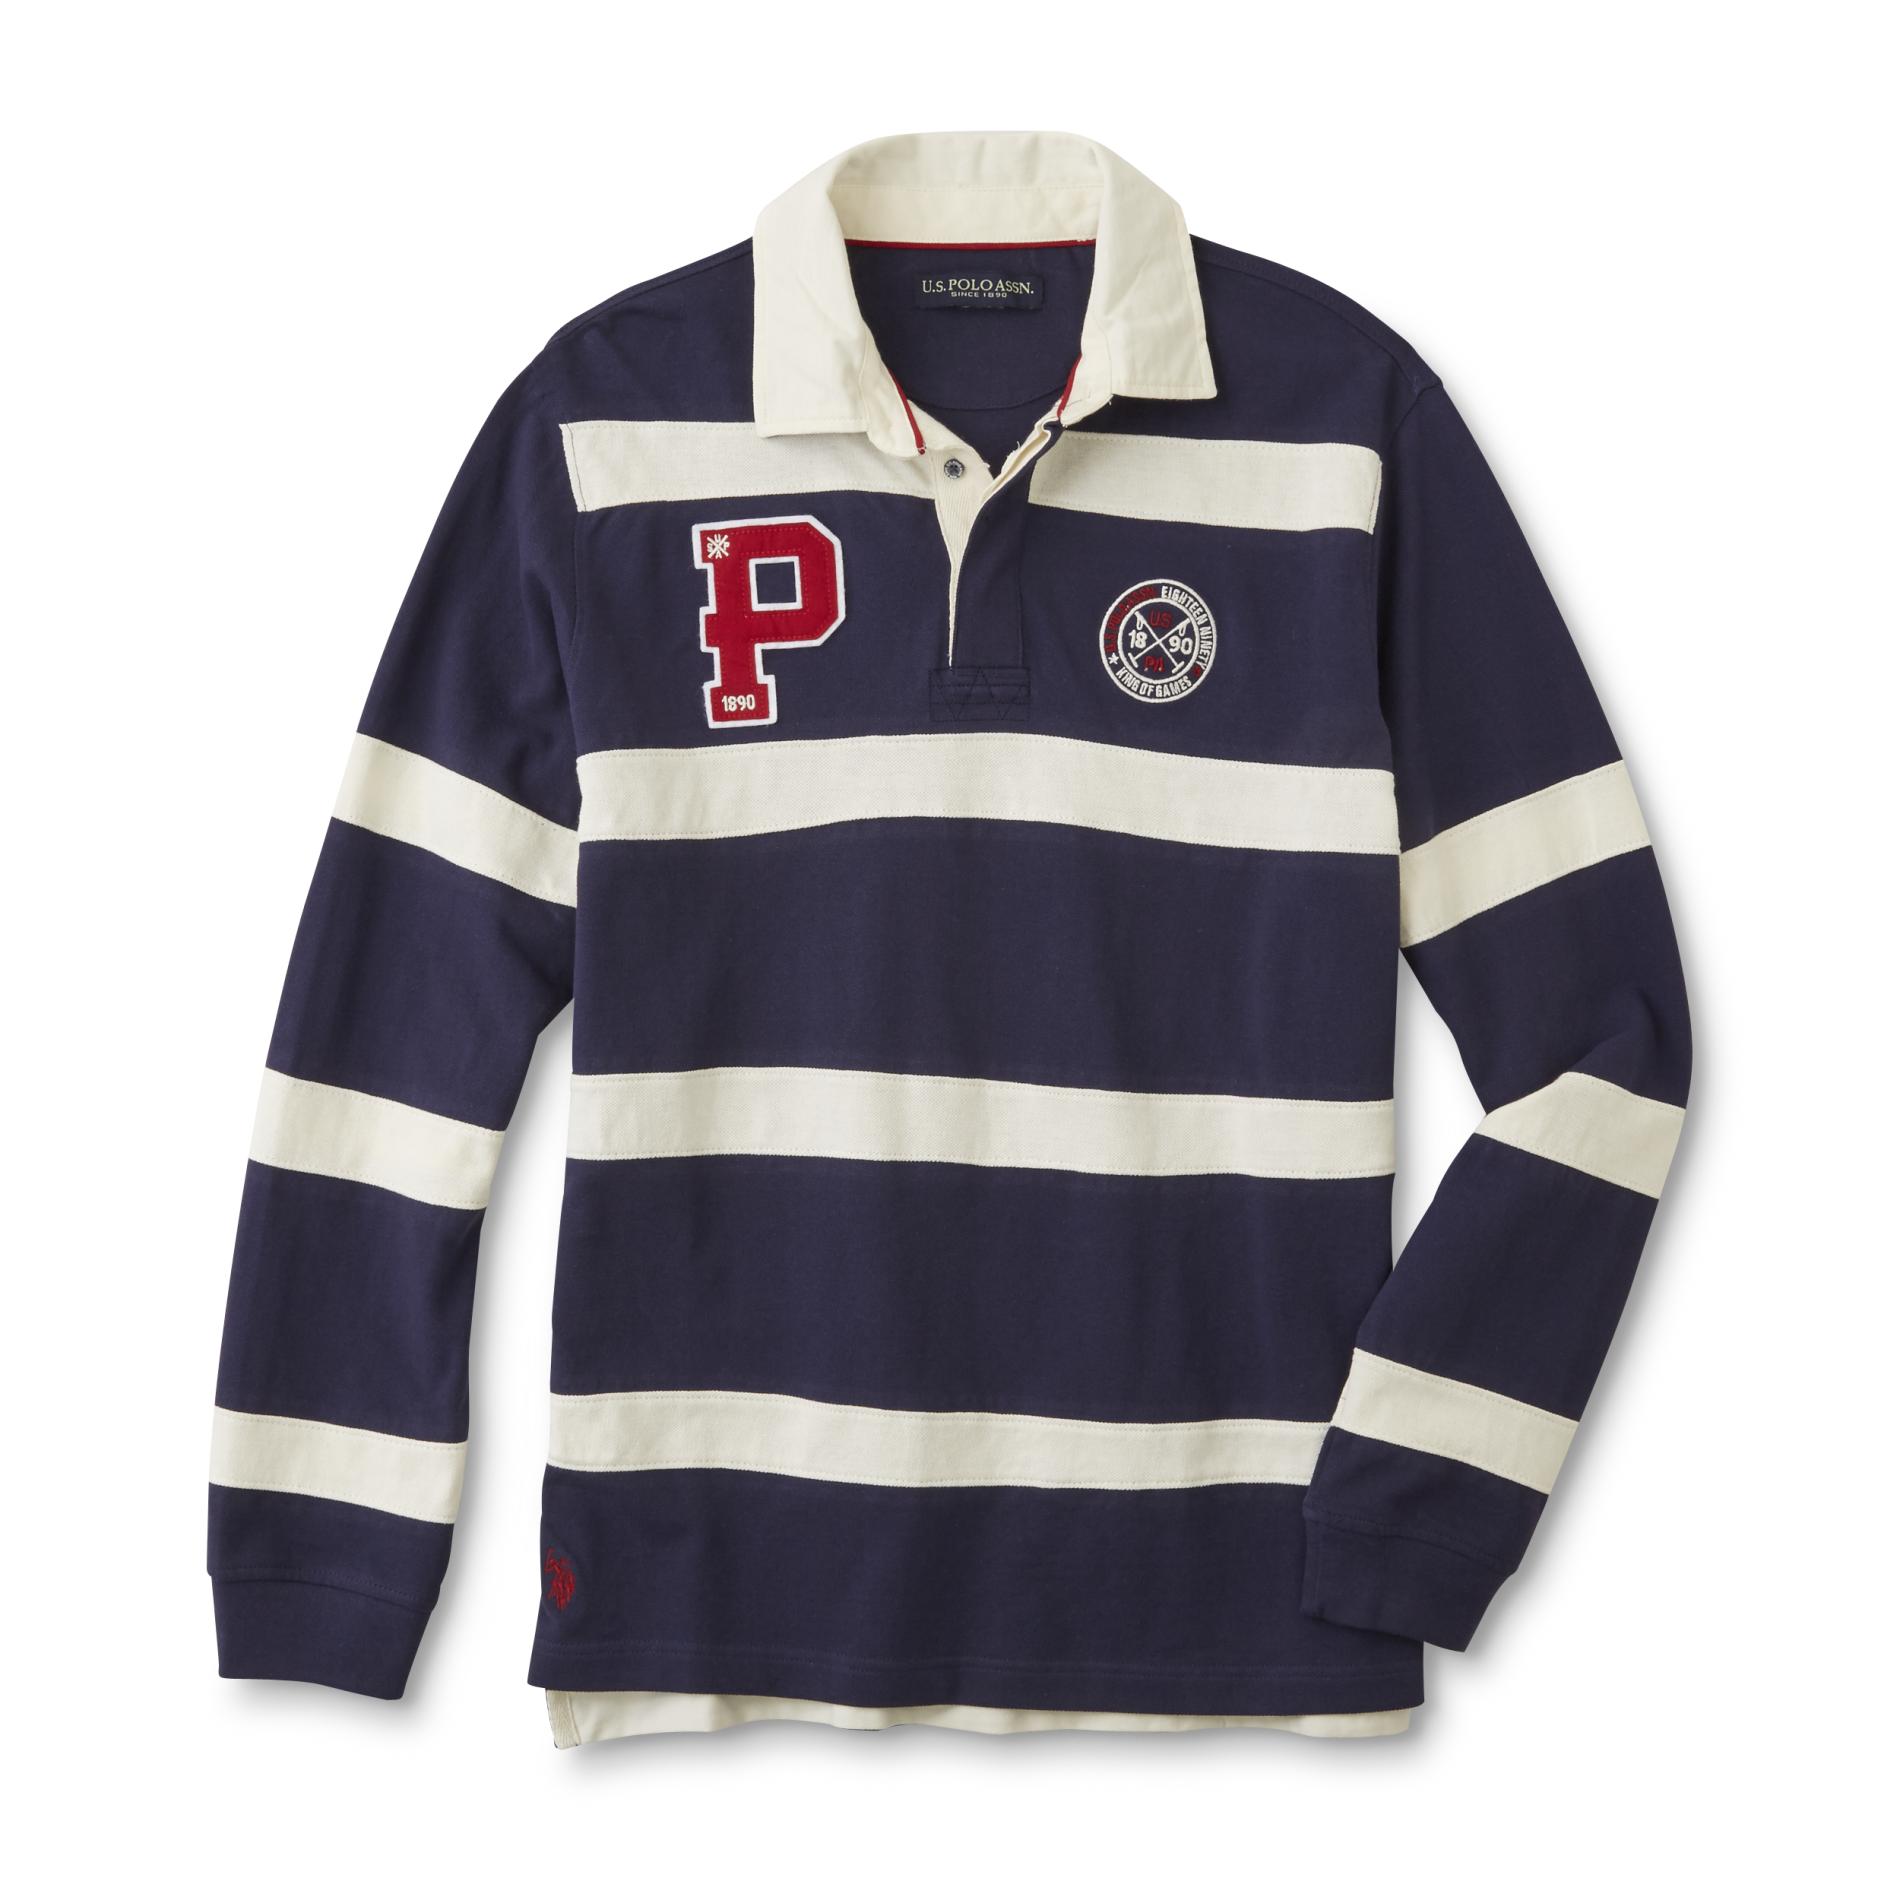 U.S. Polo Assn. Men's Long-Sleeve Rugby Shirt - Striped